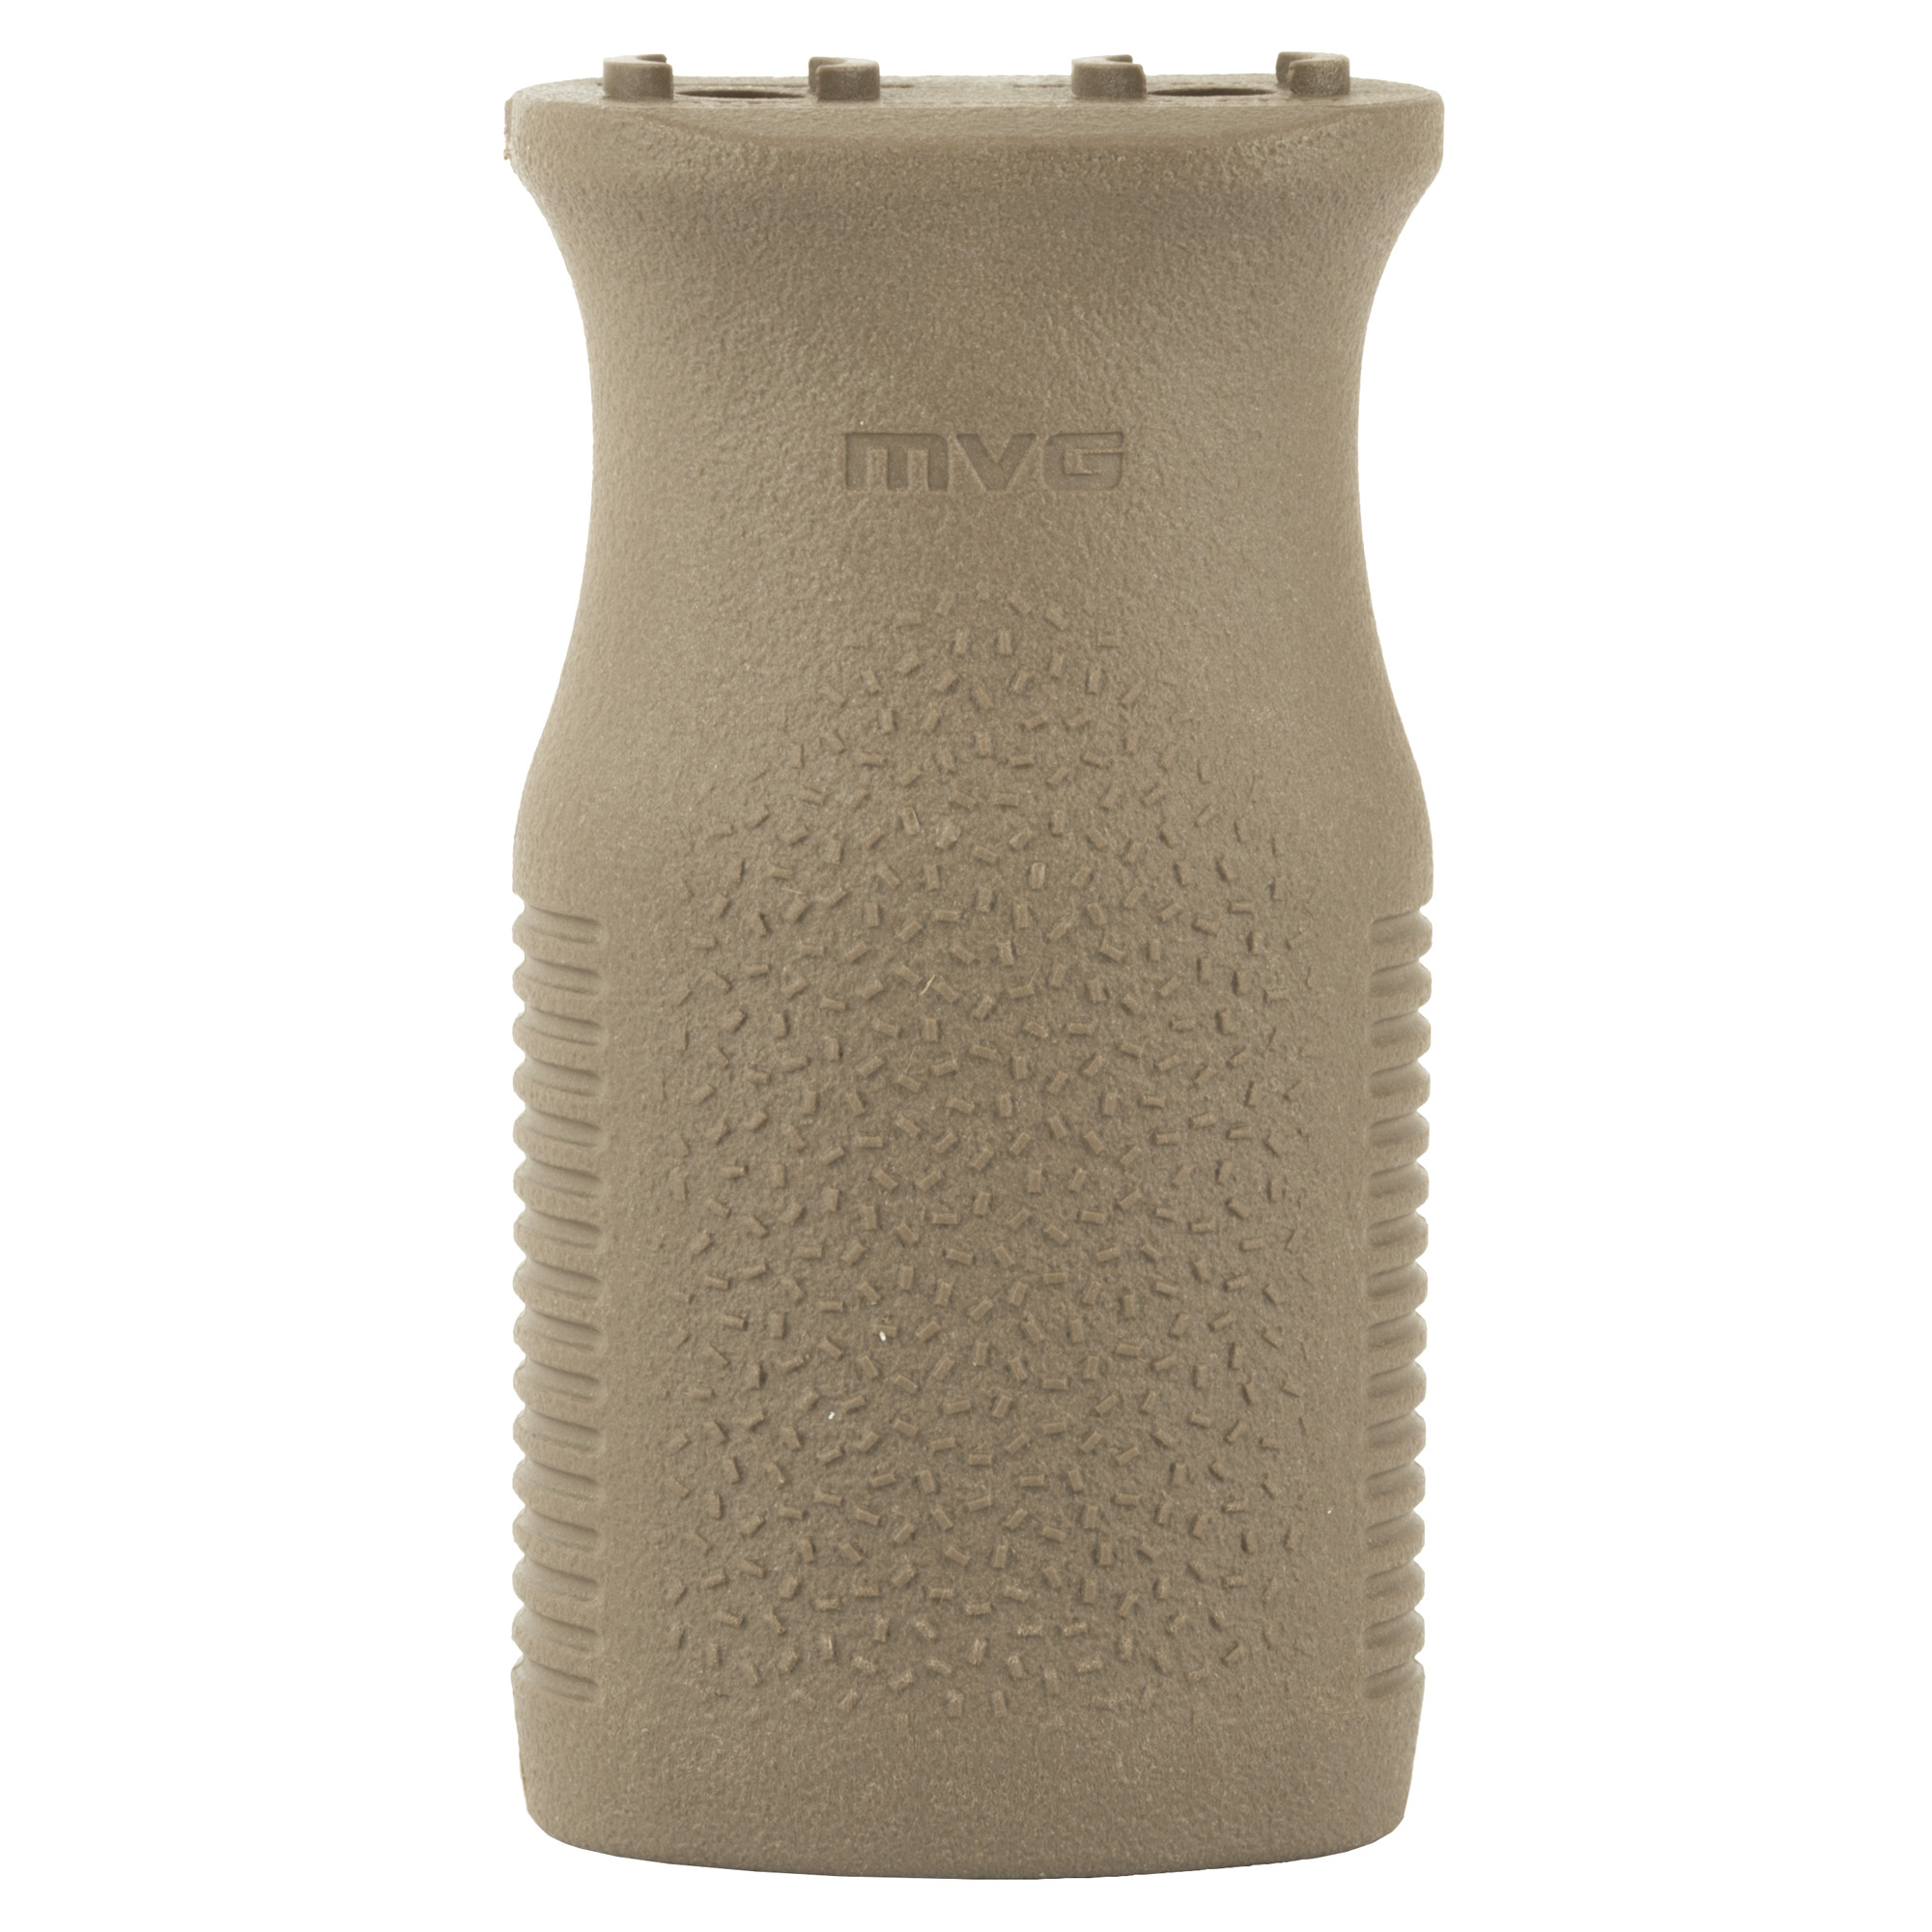 Magpul MVG MOE Vertical Grip, Fits M-LOK Handguards